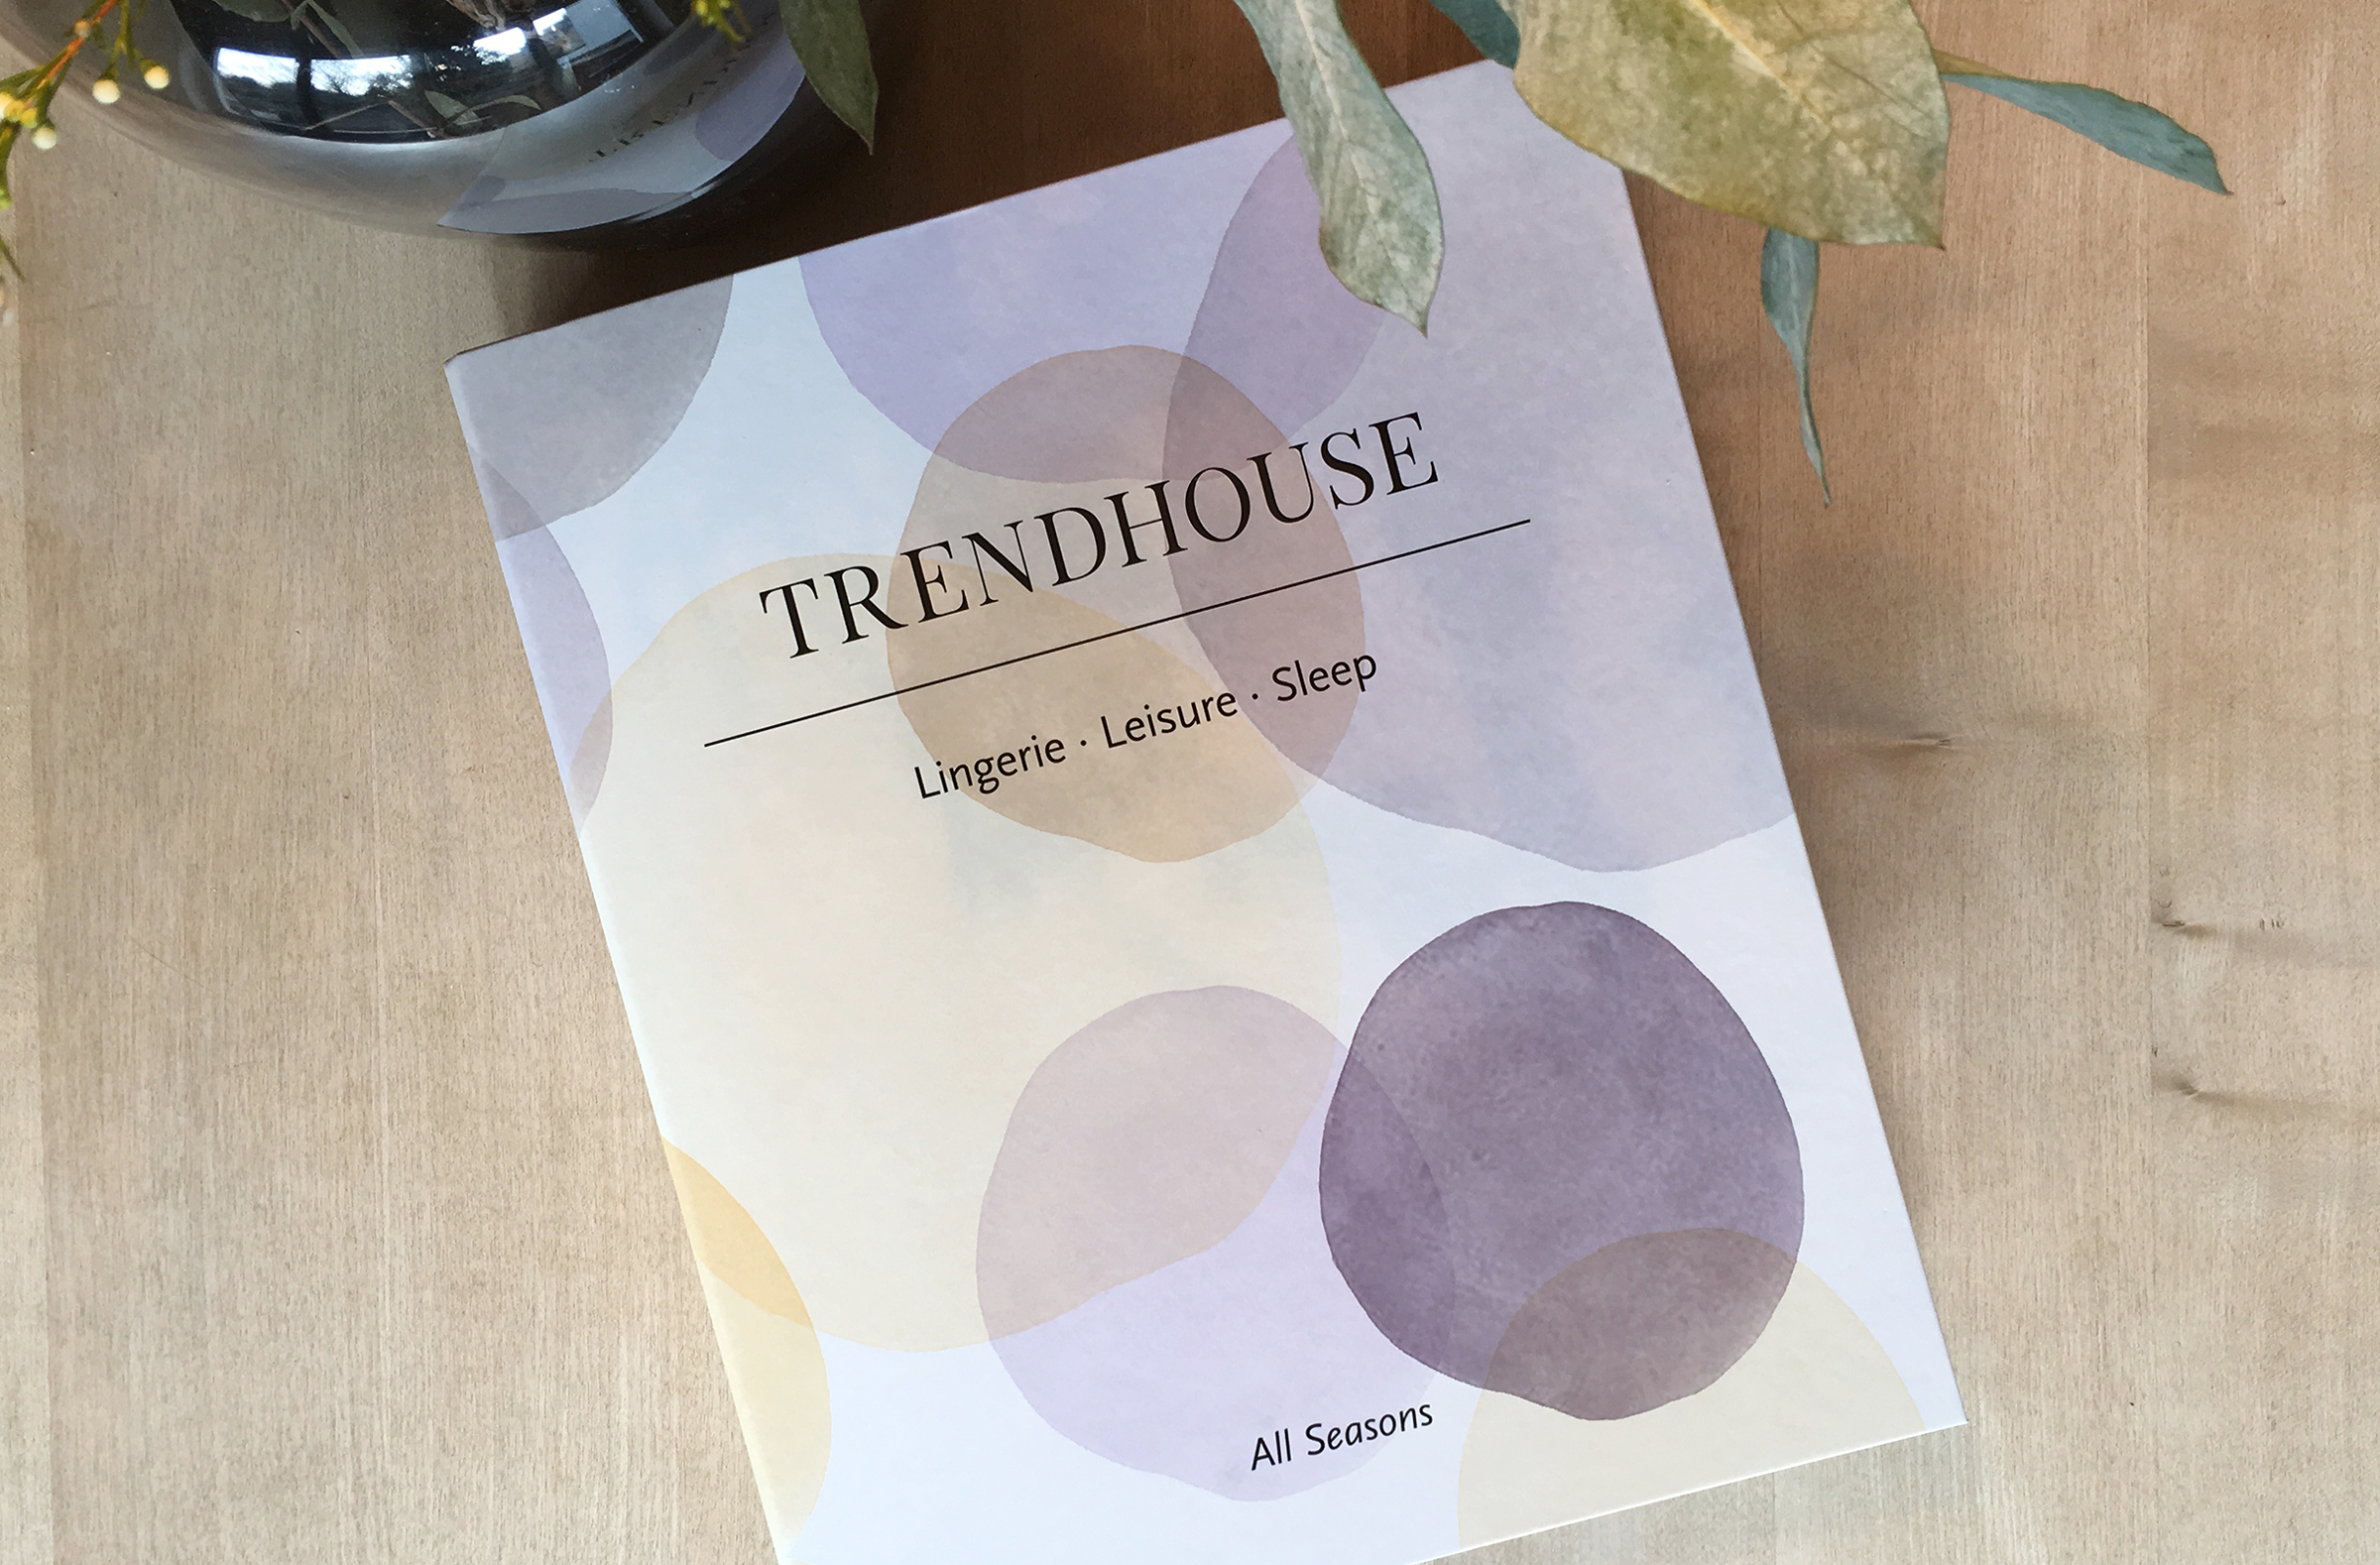 Trendhouse Lingerie Leisure Sleep / 2nd edition 